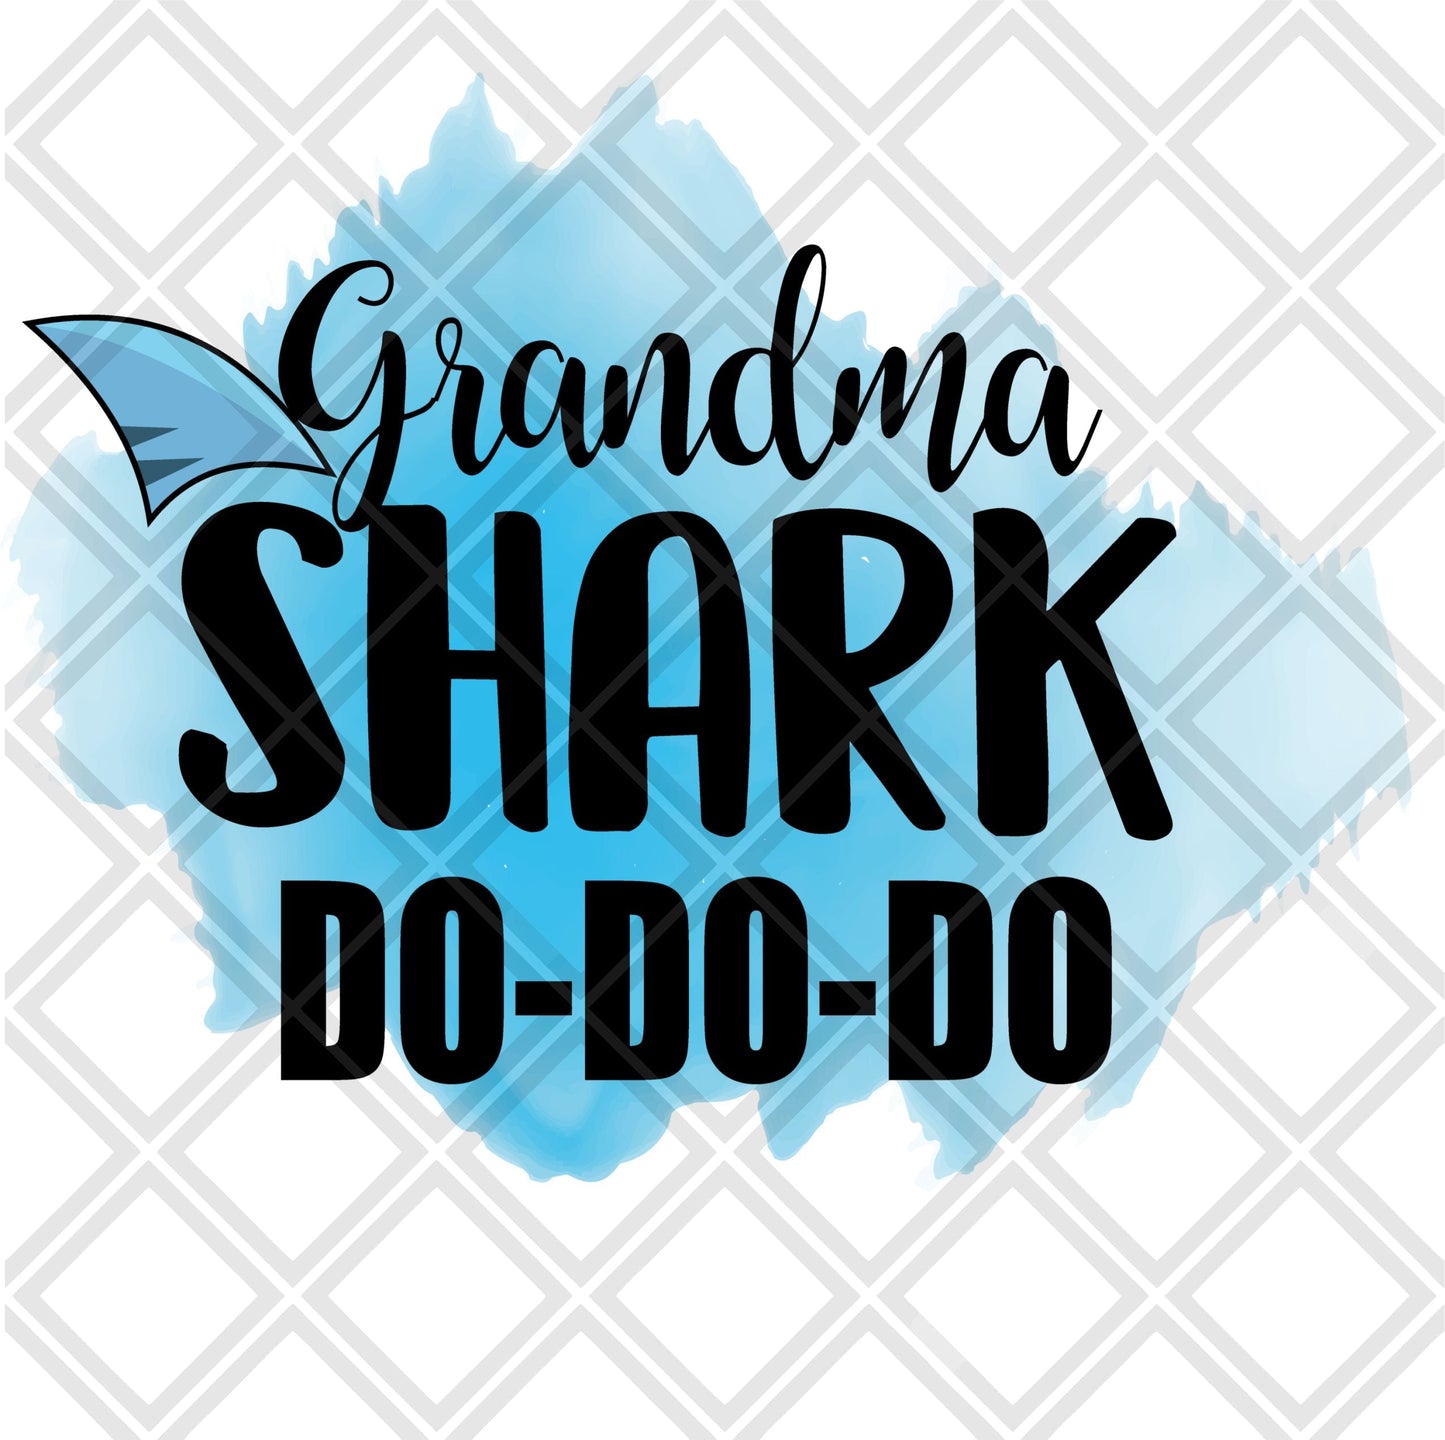 Grandma shark Digital Download Instand Download